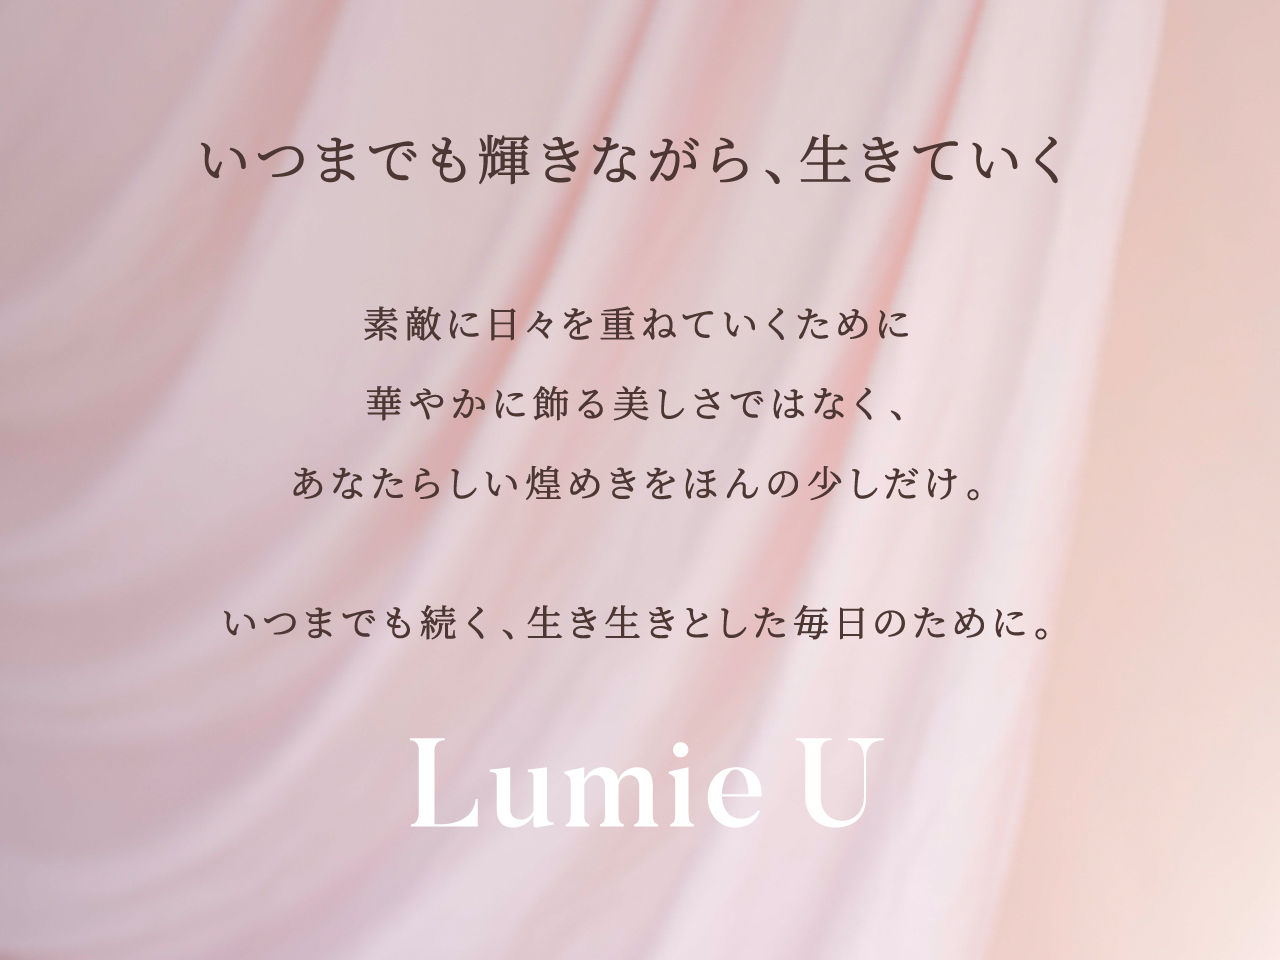 Lumie Uについて